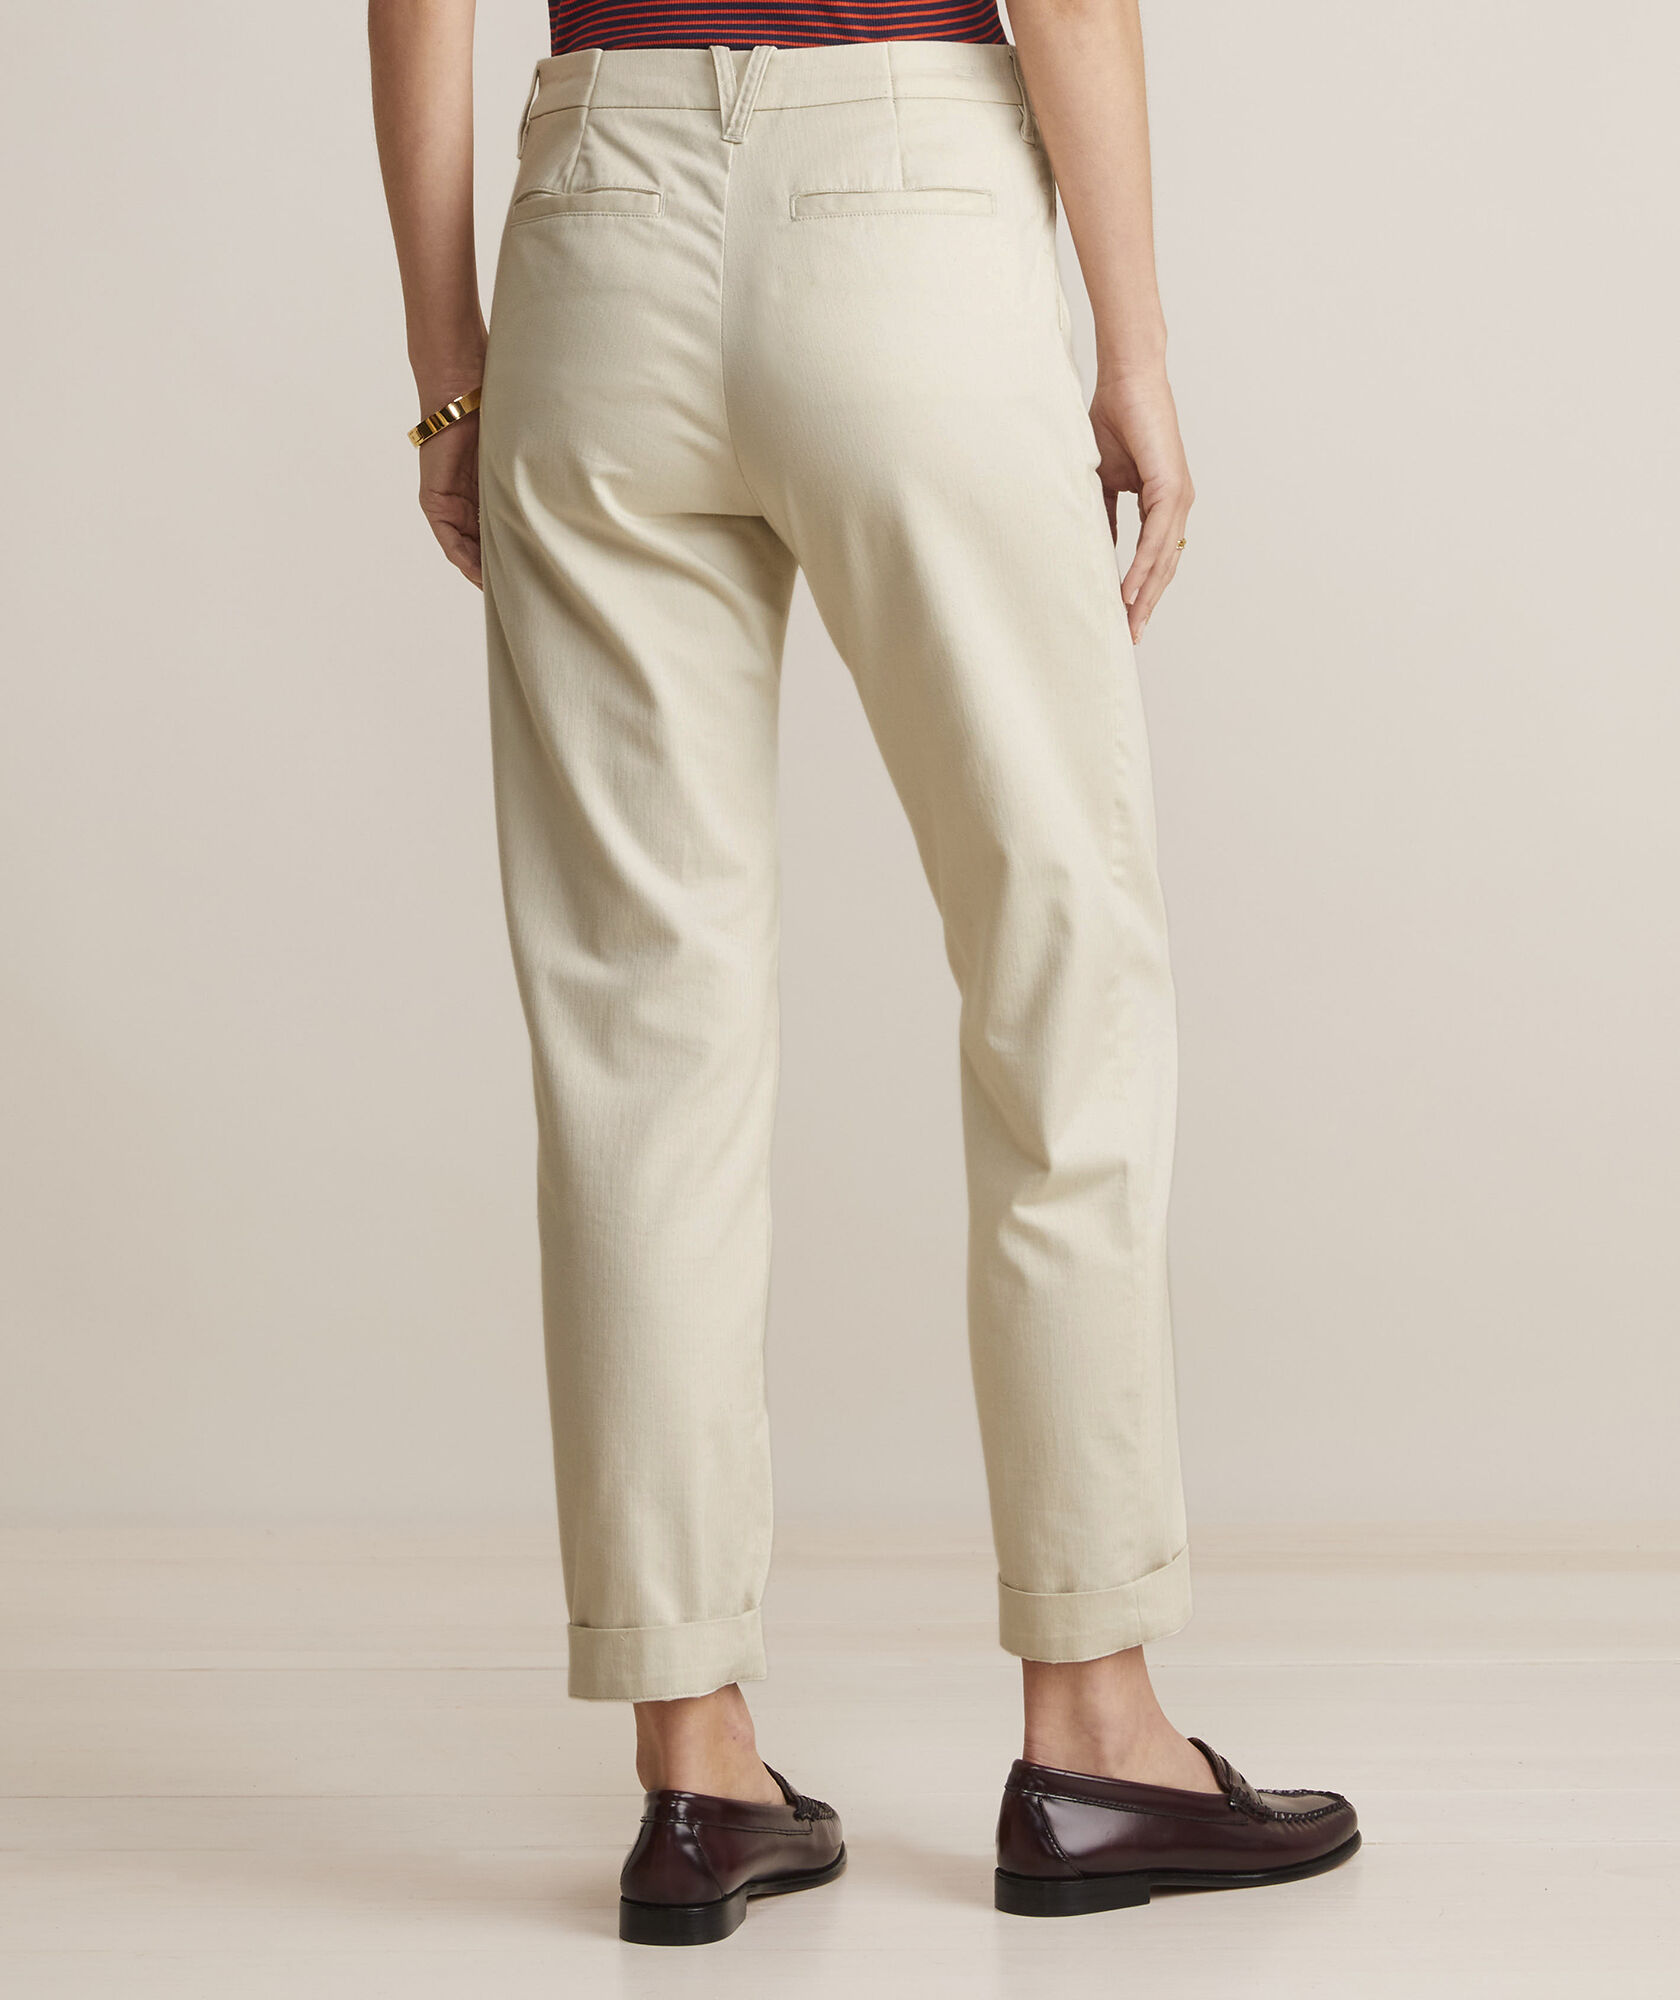 Buy Mehrang Womens Trouser Pants/Slimfit Regular Wear Chinos Pants for Women  (M, Beige) at Amazon.in